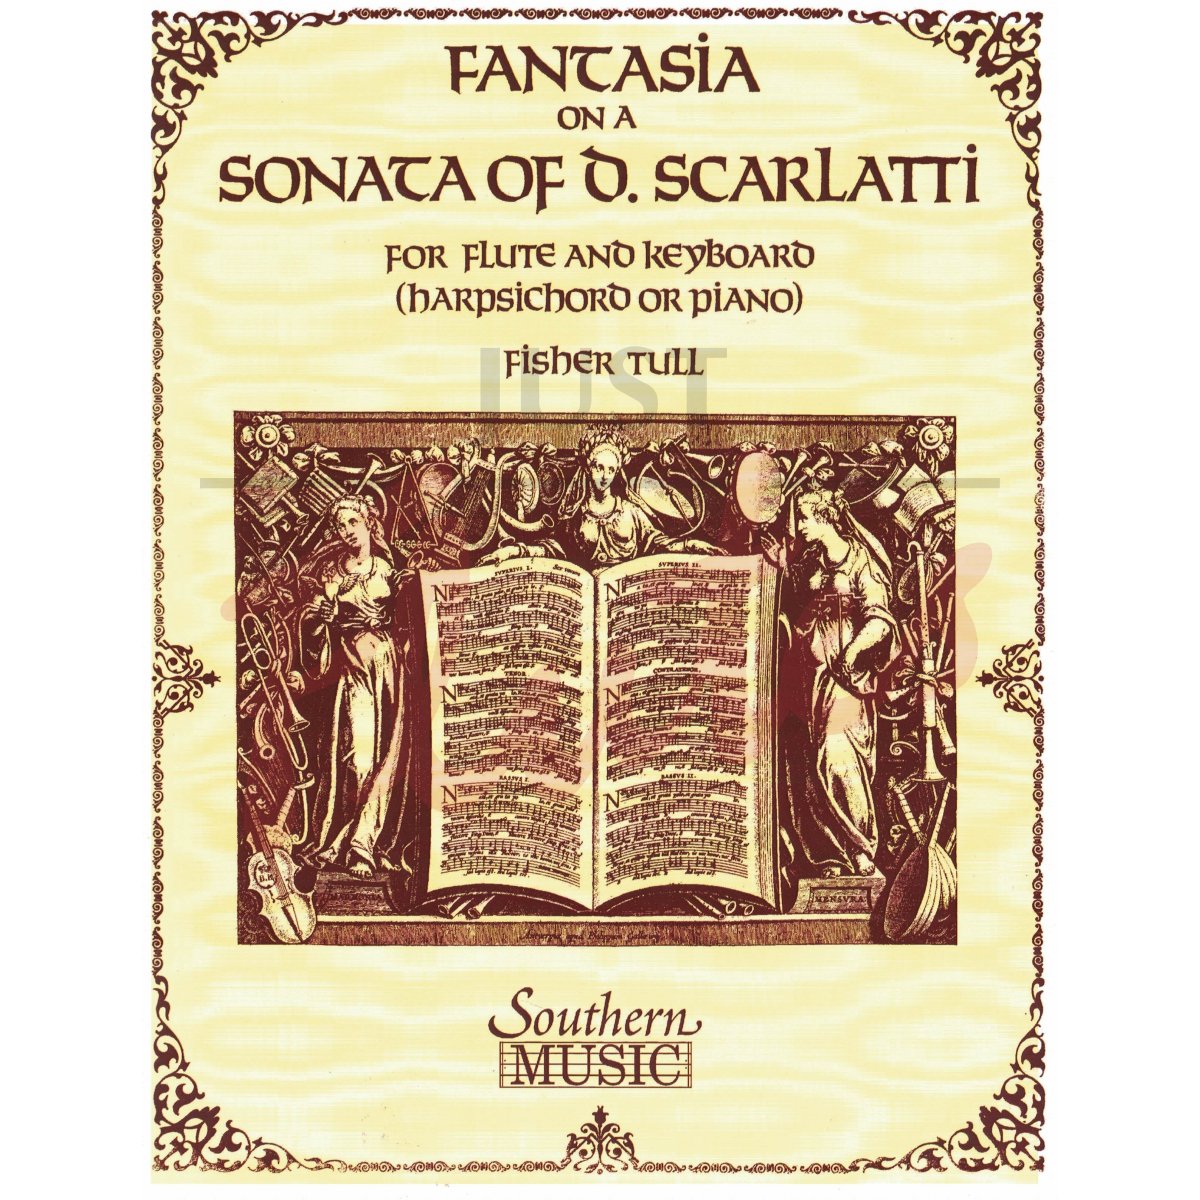 Fantasia on a Sonata of D Scarlatti for Bass Flute and Harpsichord